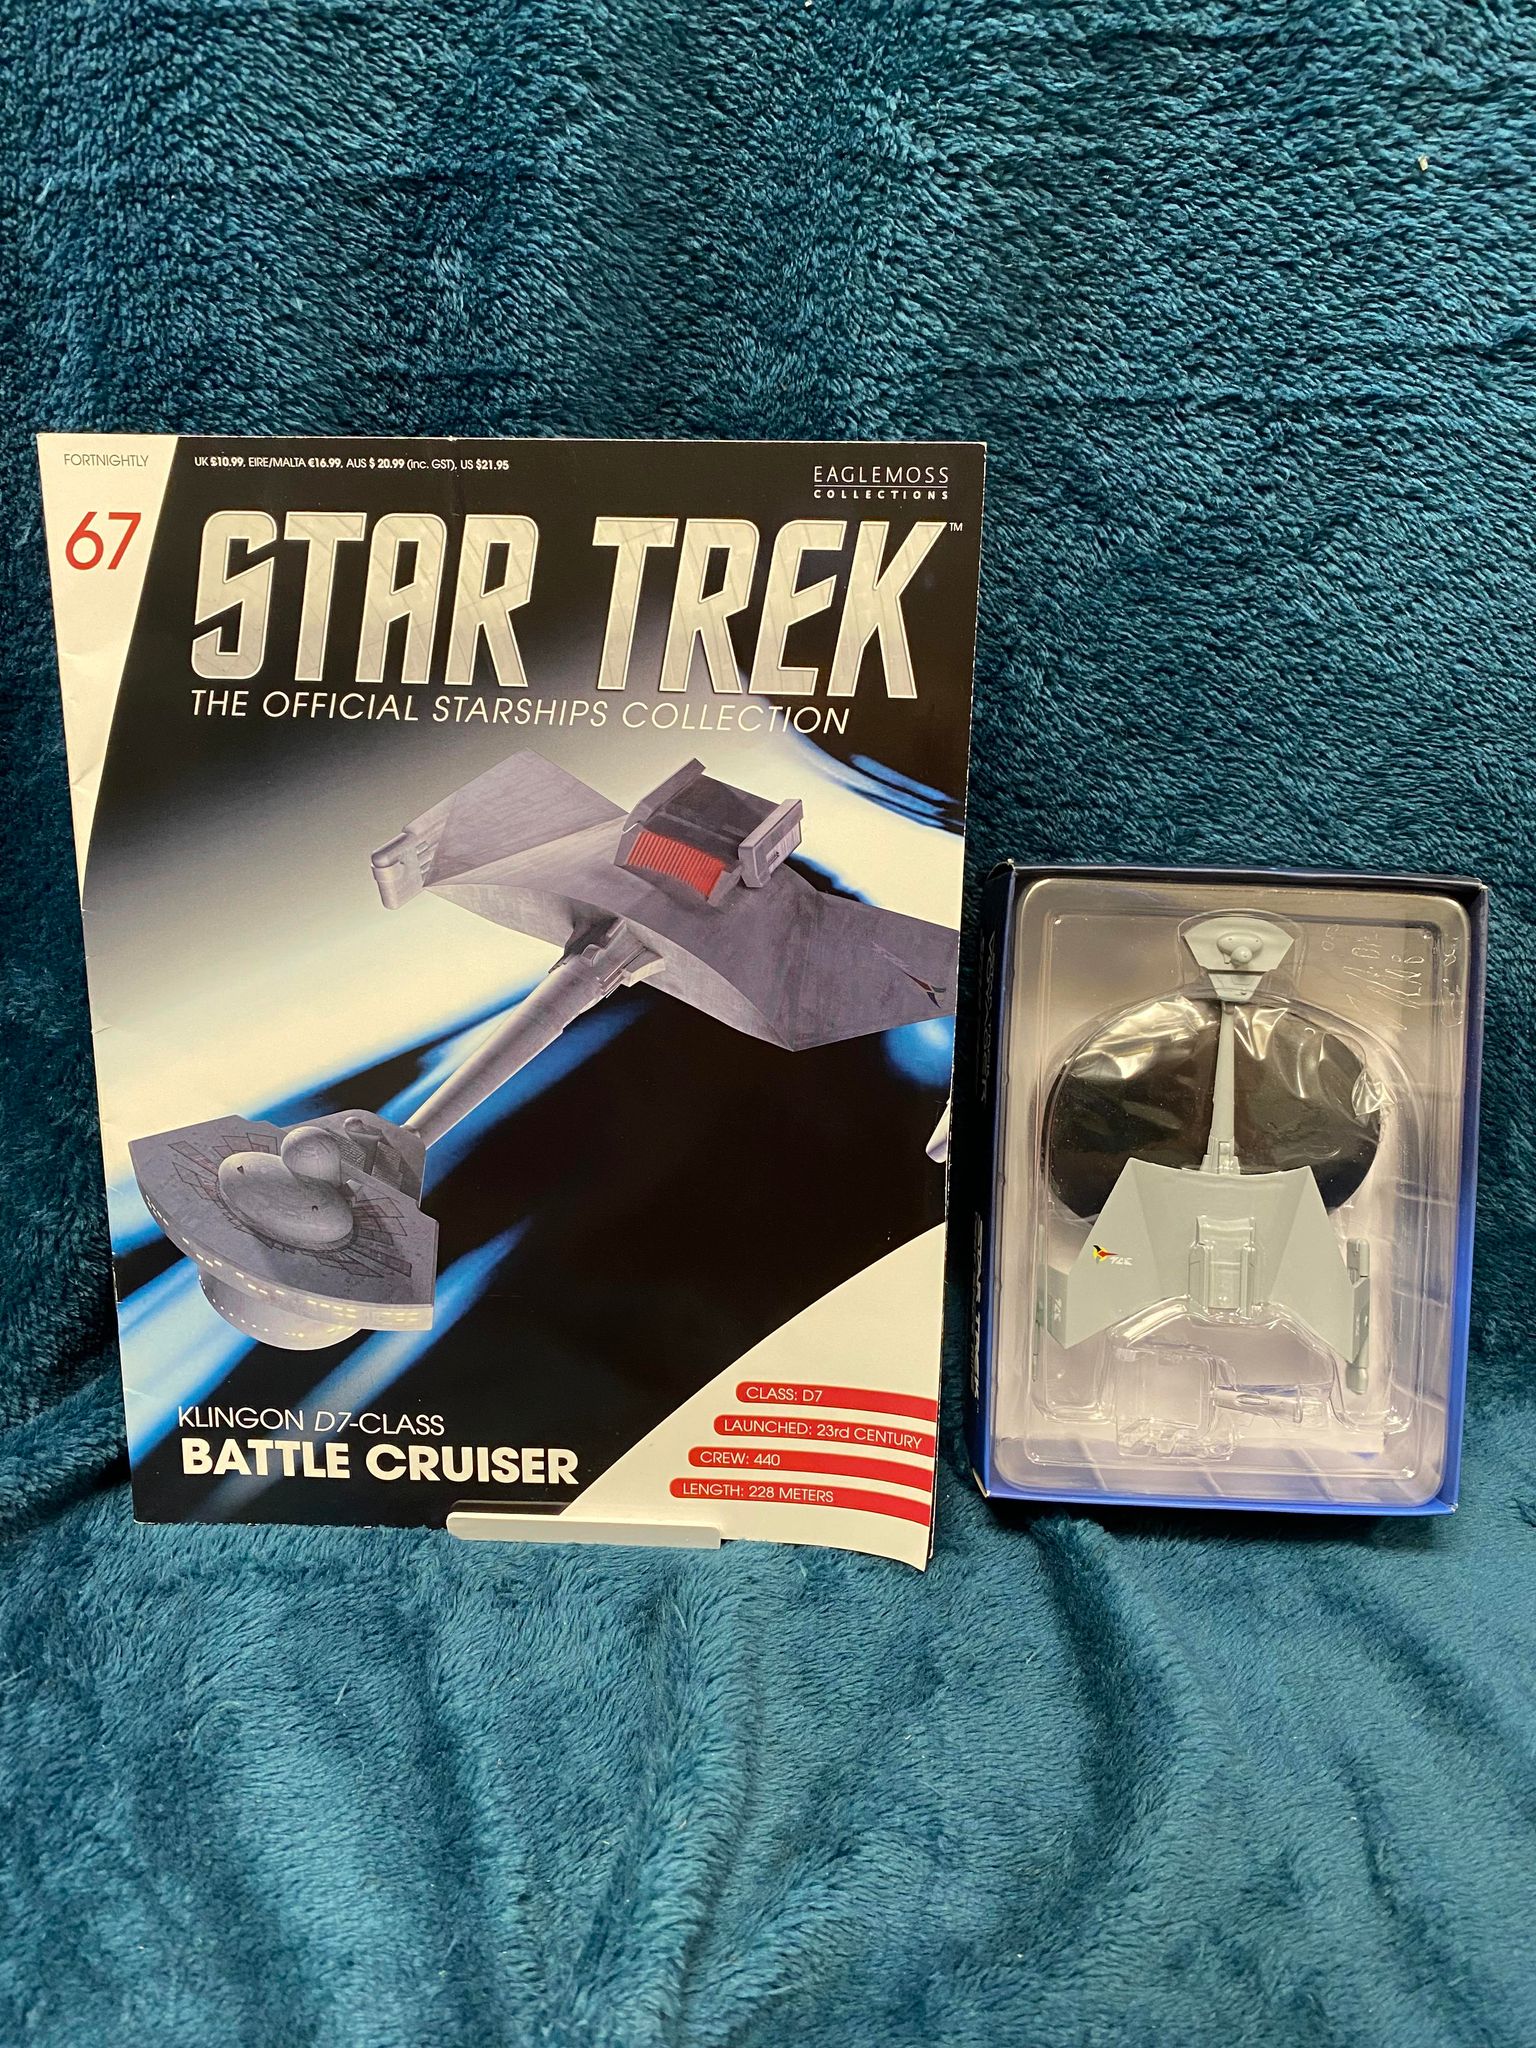 Star Trek - The Official Starships Collection - D7-CLASS BATTLE CRUISER model & magazine